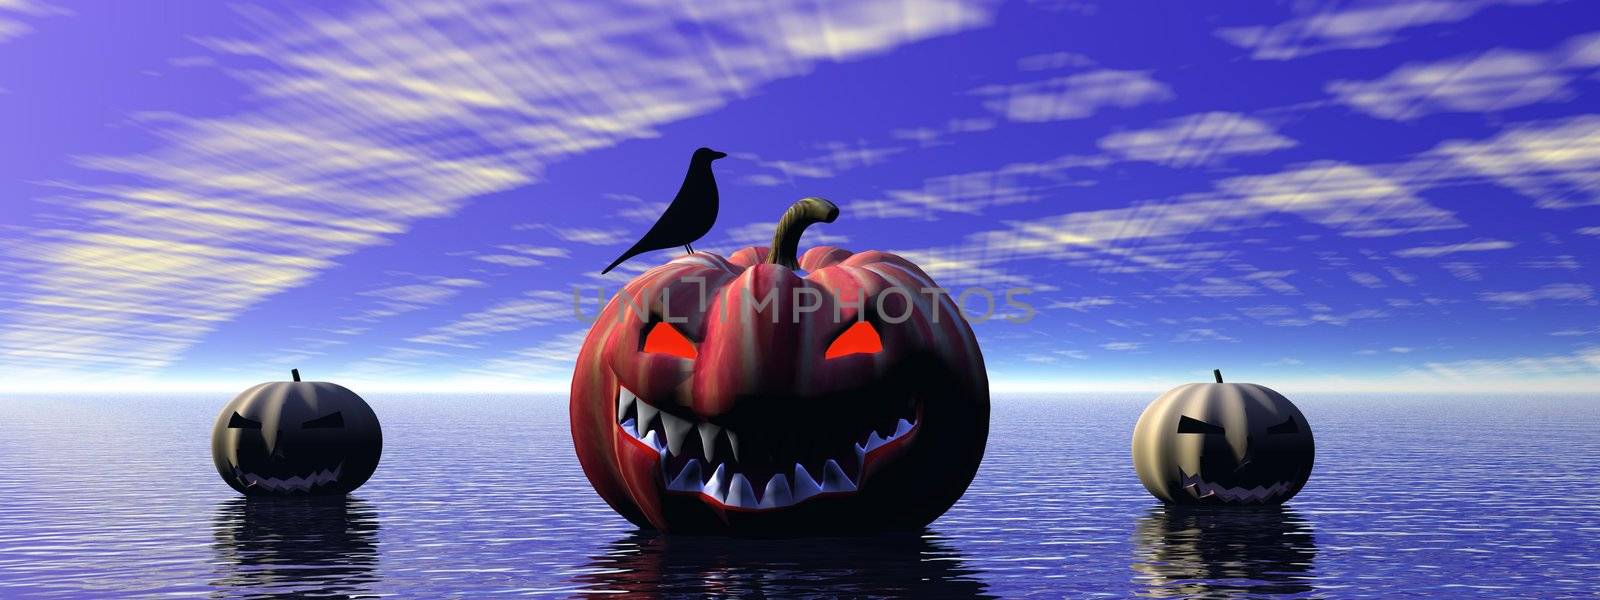 Halloween background by mariephotos